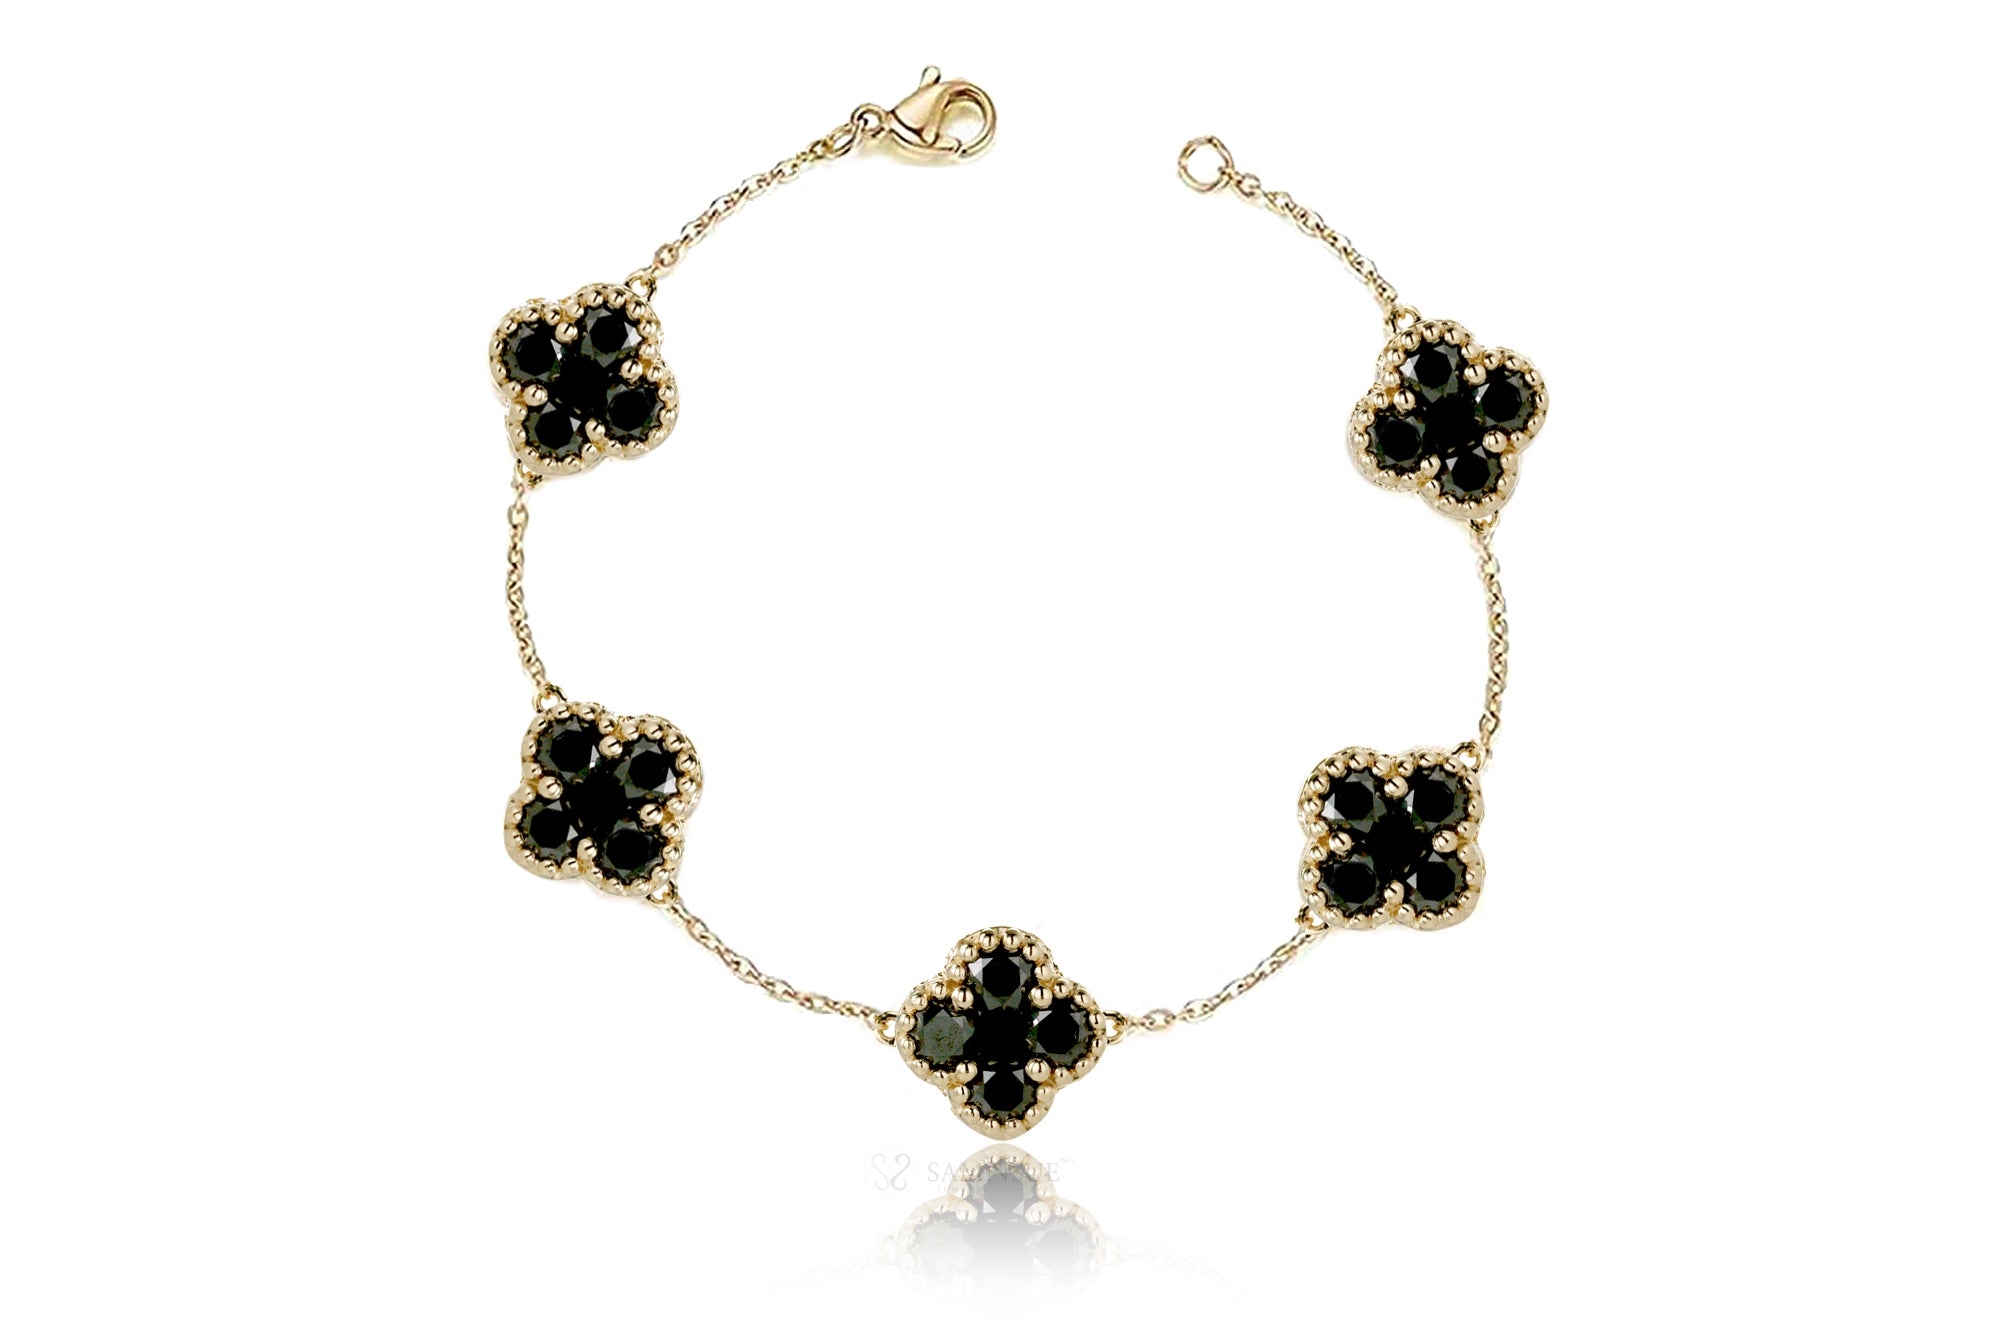 Clover bracelet with black diamonds